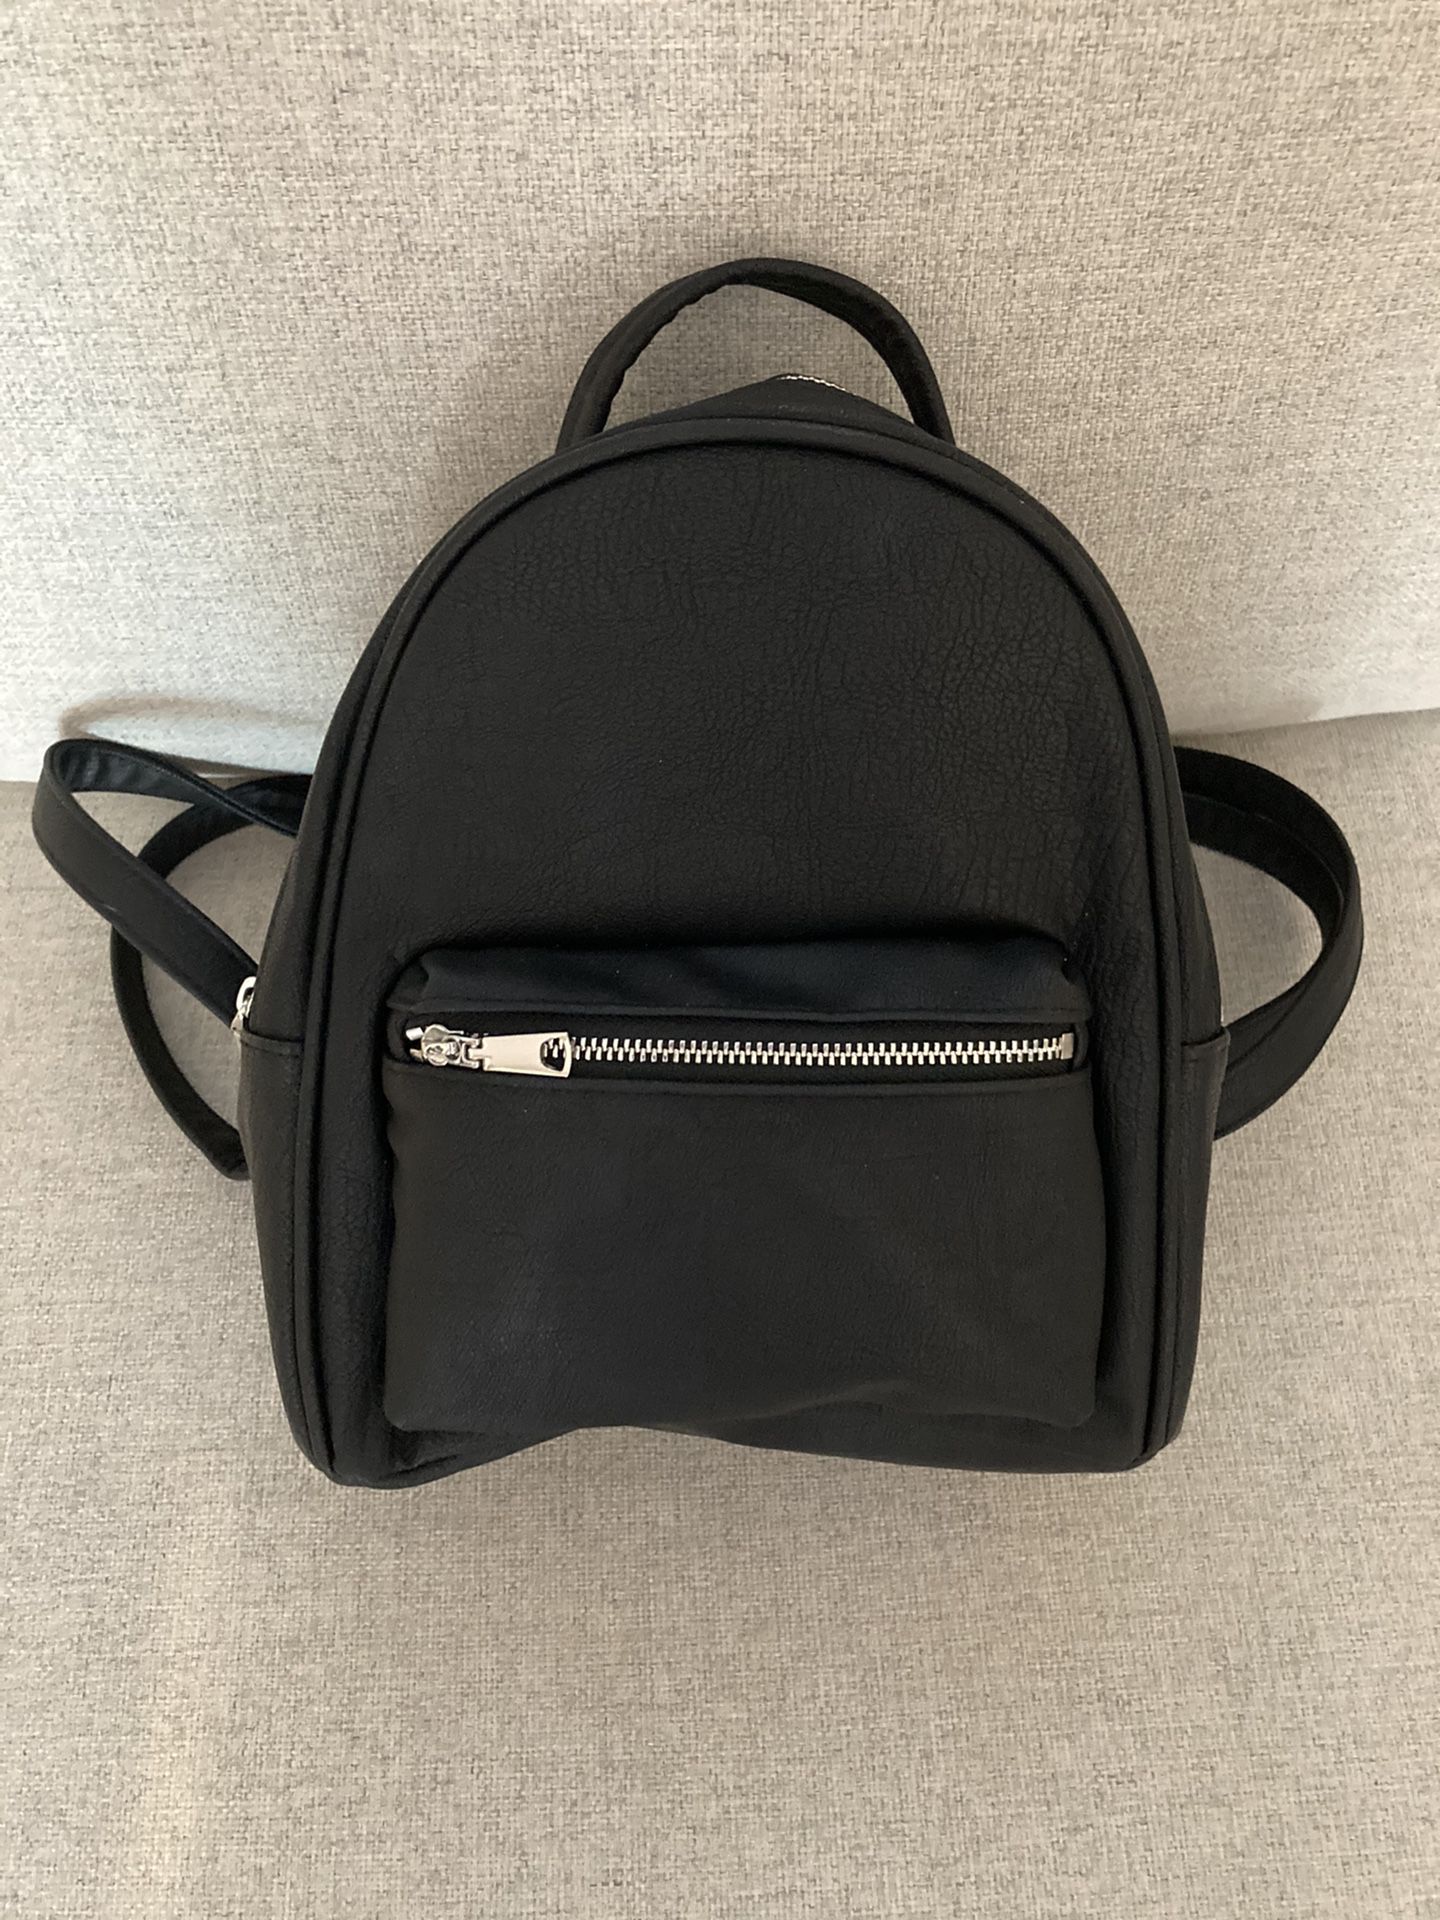 H&M mini black leather backpack